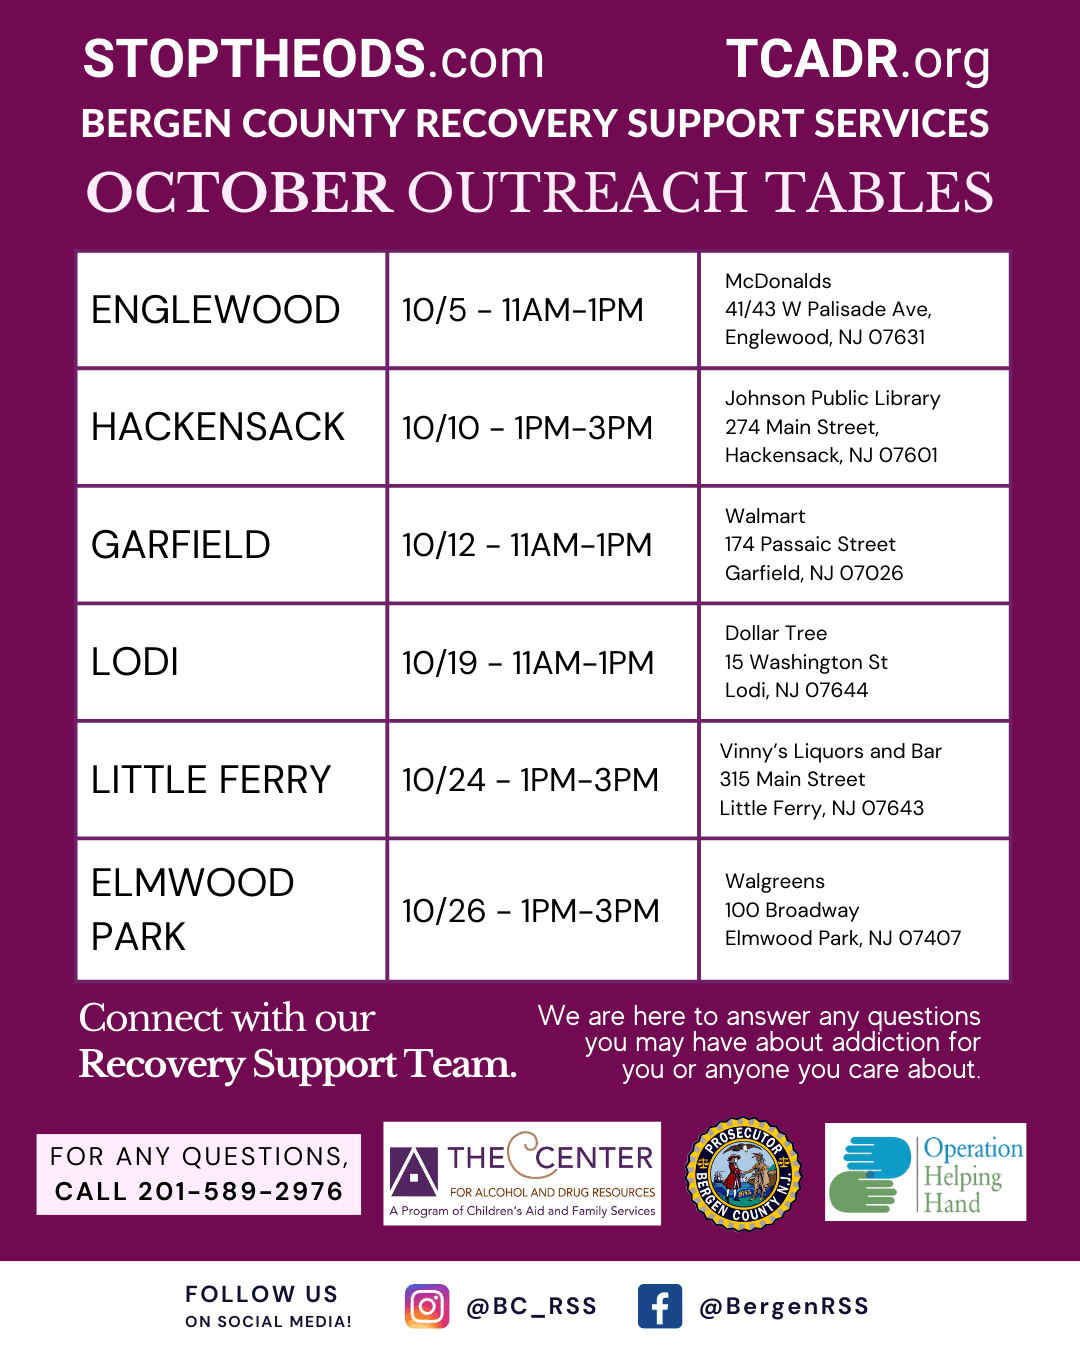 Hackensack Community Outreach Table Calendar Events TCADR